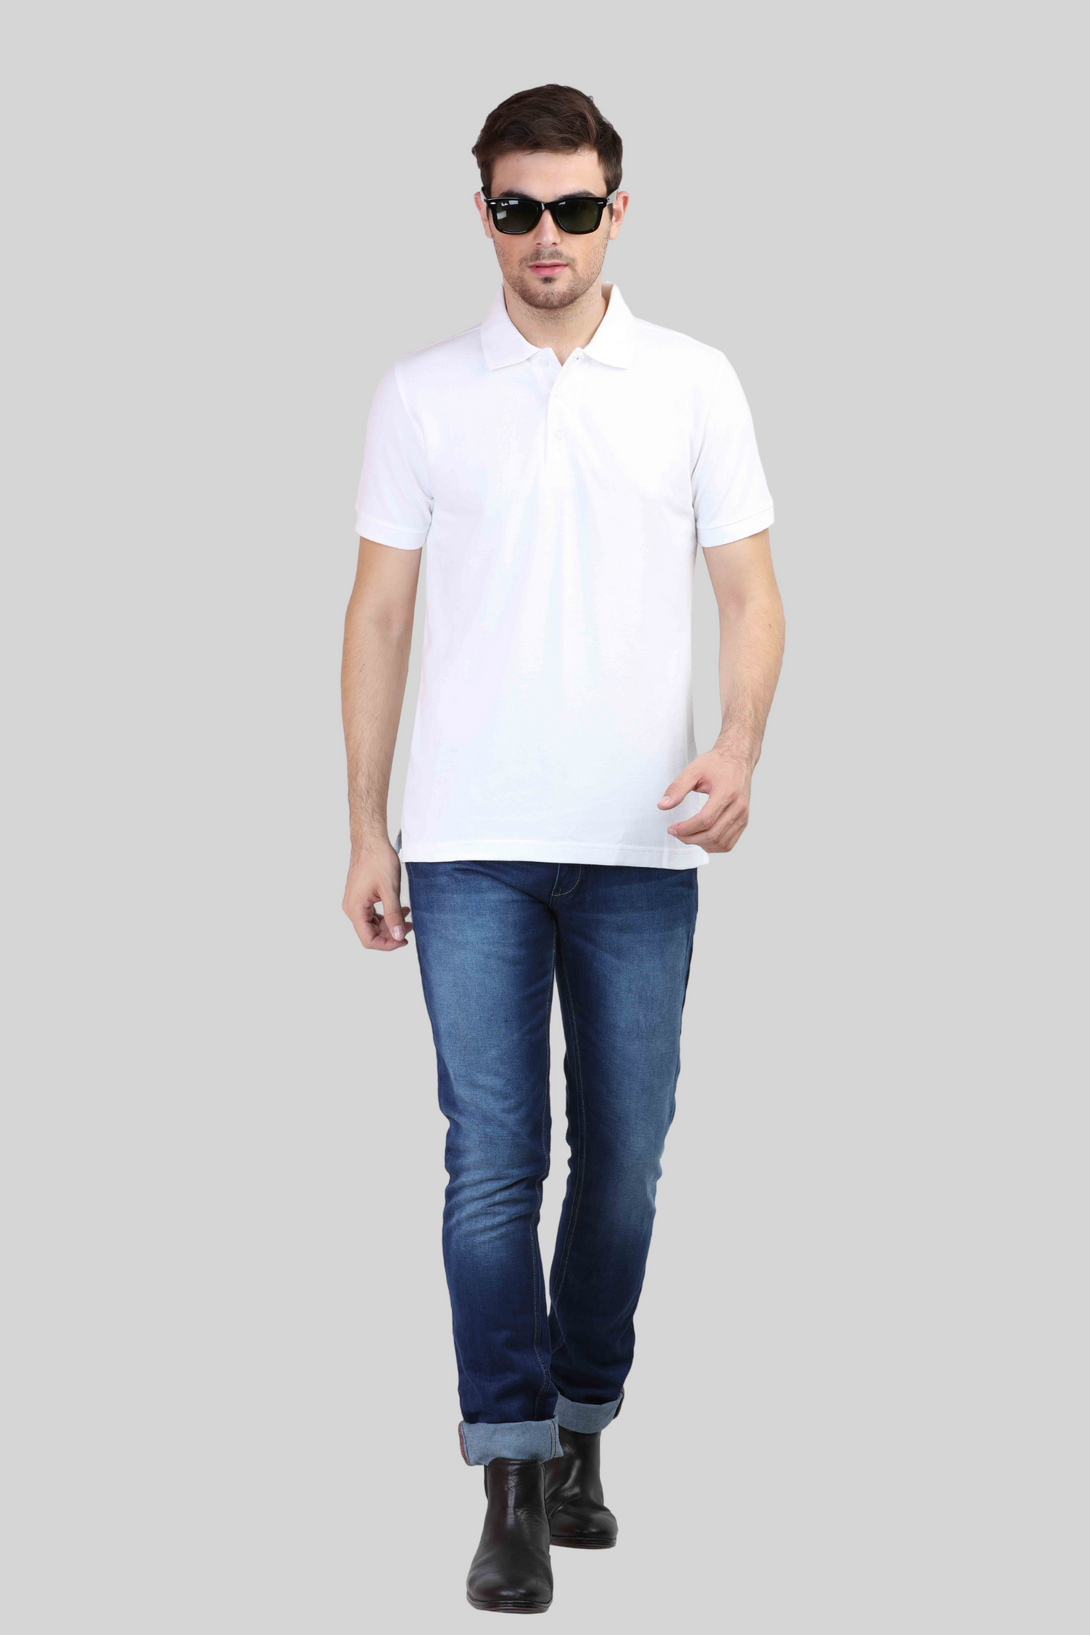 White Polo T-Shirt For Men - WowWaves - 6